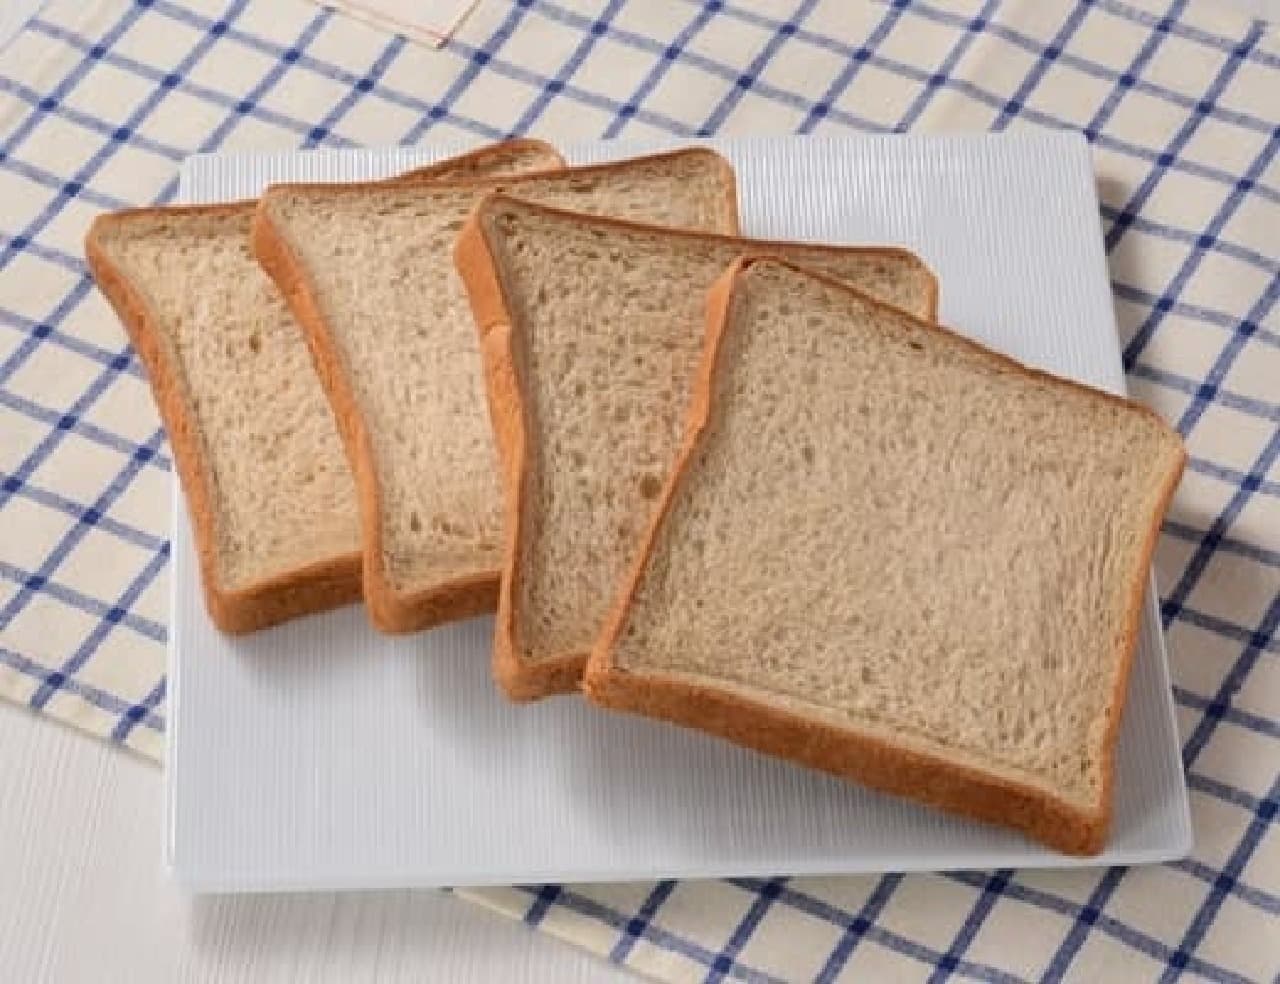 LAWSON "NL Bread with Bran 4 slices ~Including Lactobacillus acidophilus